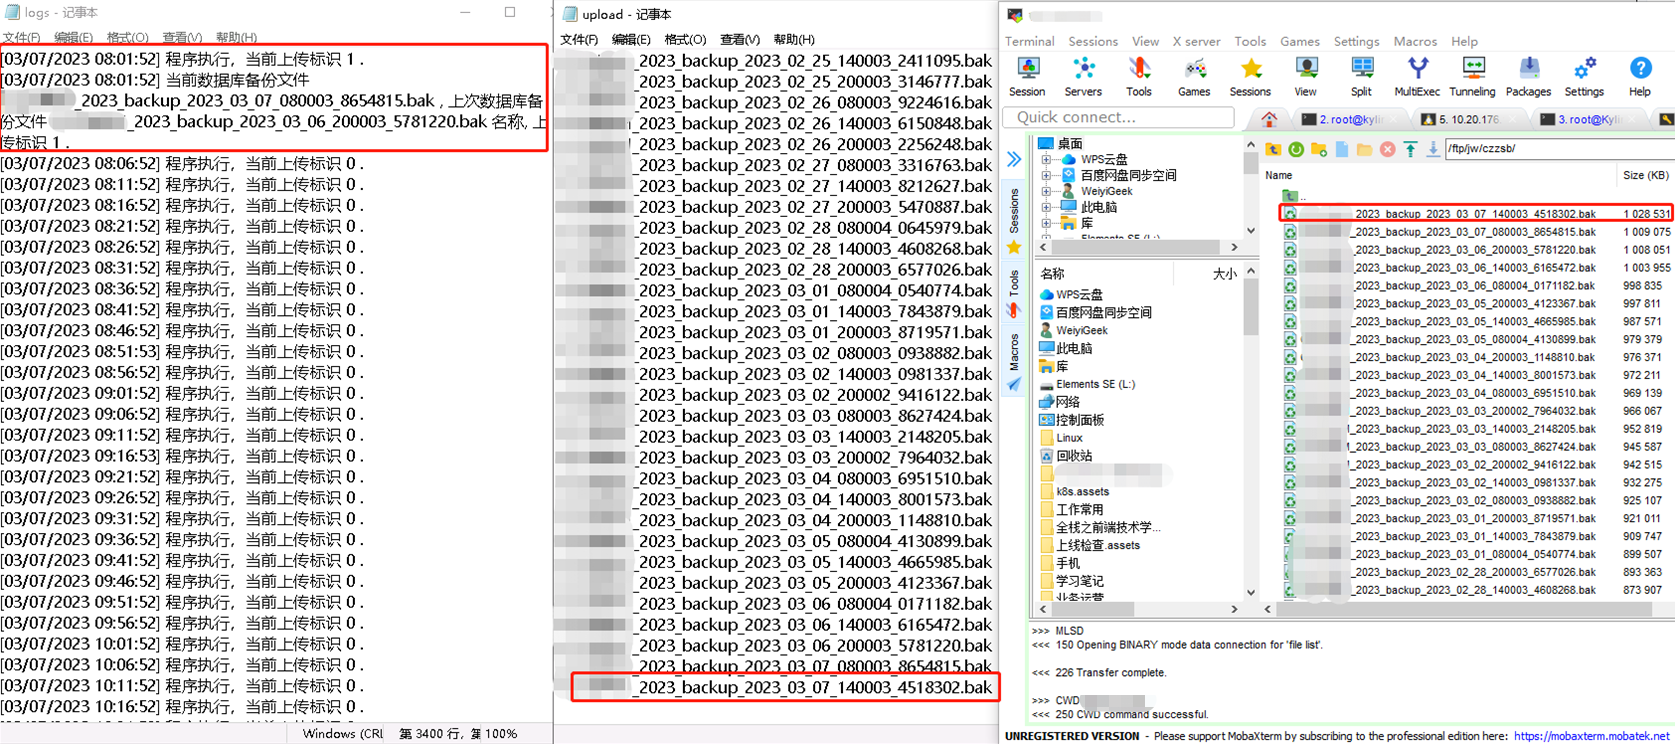 weiyigeek.top-上传到FTP服务器中的备份文件图